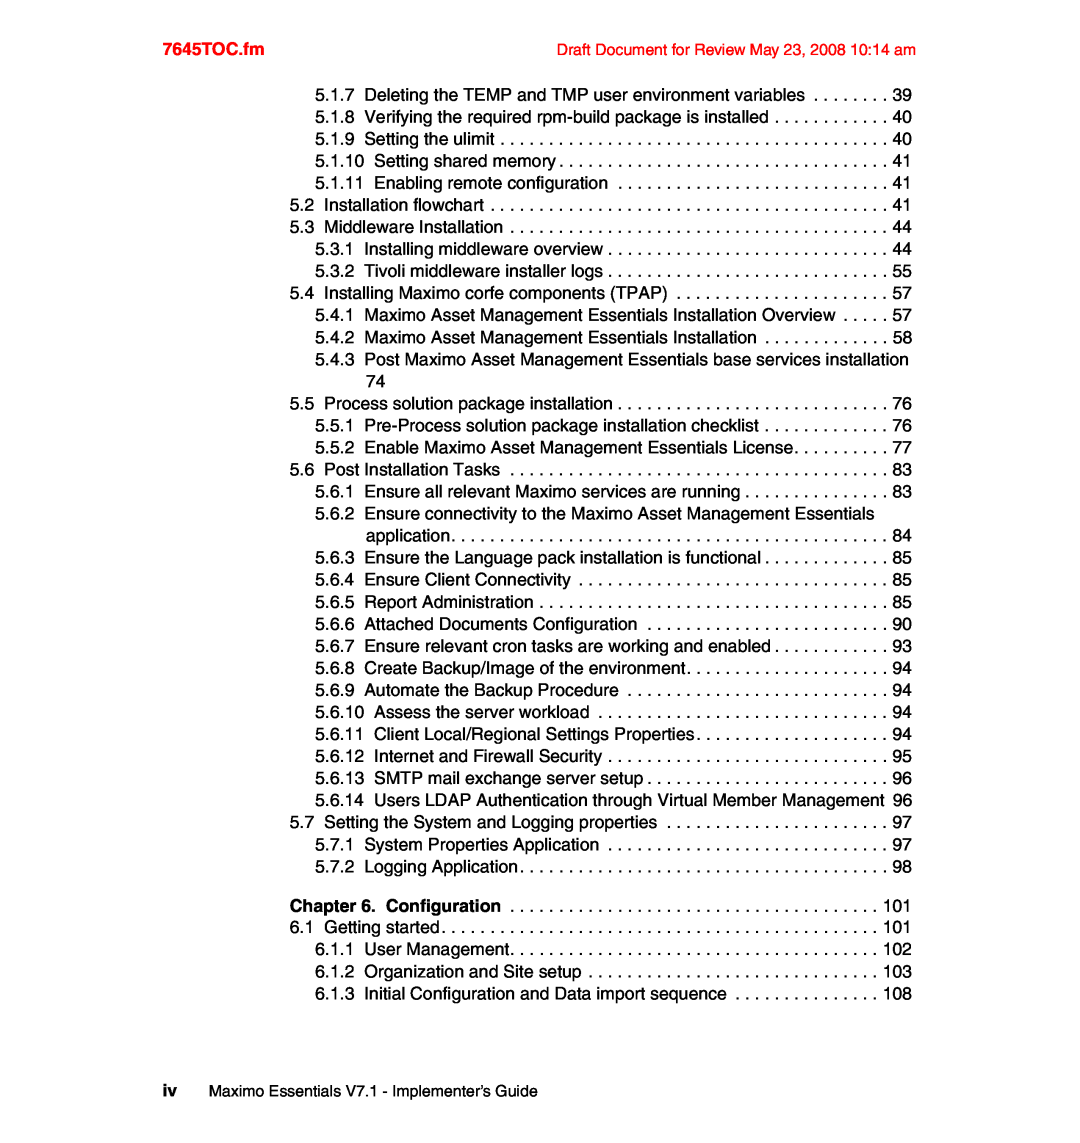 IBM SG24-7645-00 manual 7645TOC.fm, ivMaximo Essentials V7.1 - Implementer’s Guide 